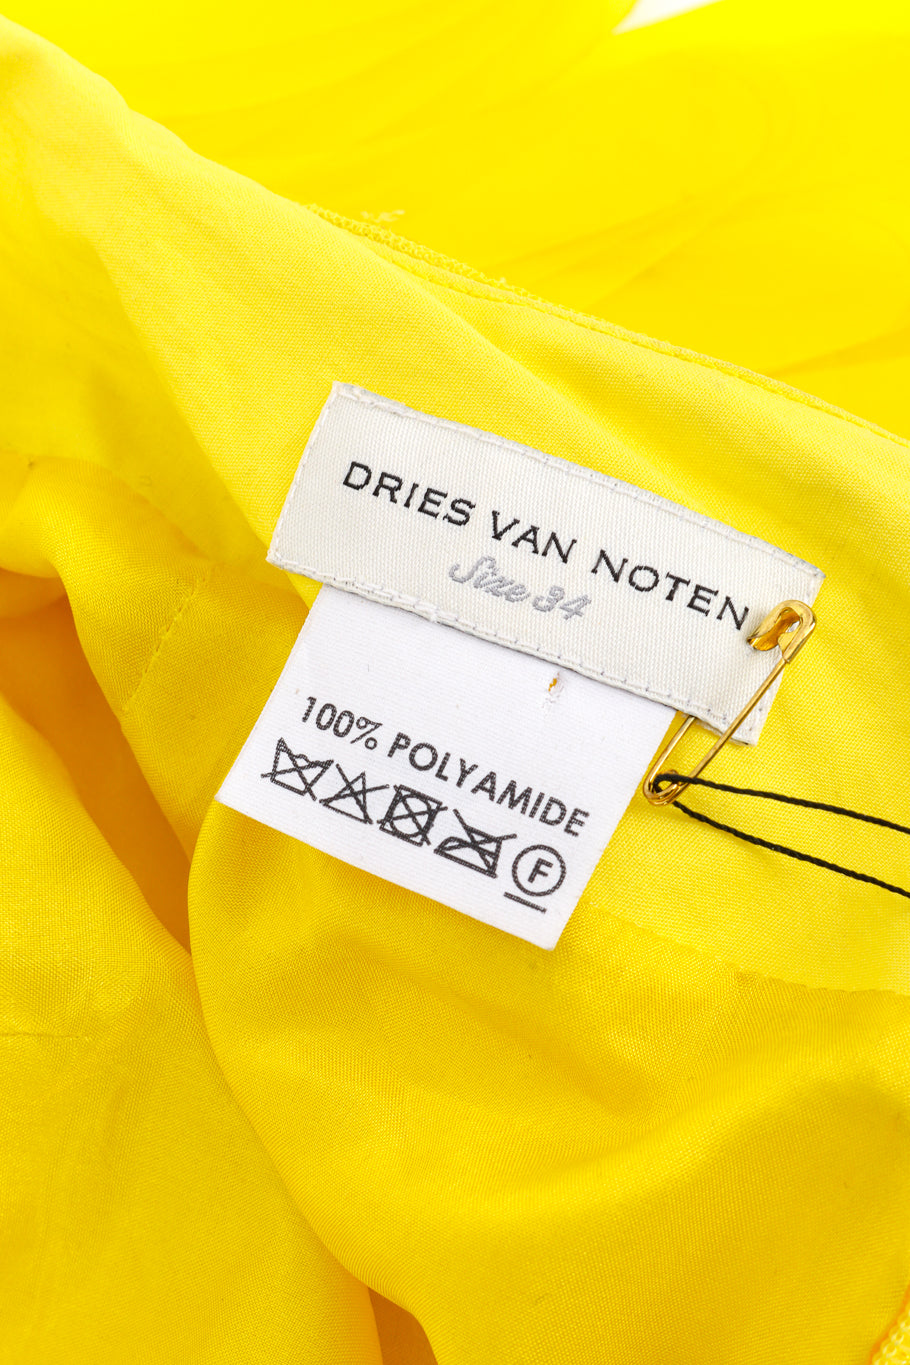 Dries Van Noten 2019 S/S Paillette Midi Skirt signature label closeup @recess la